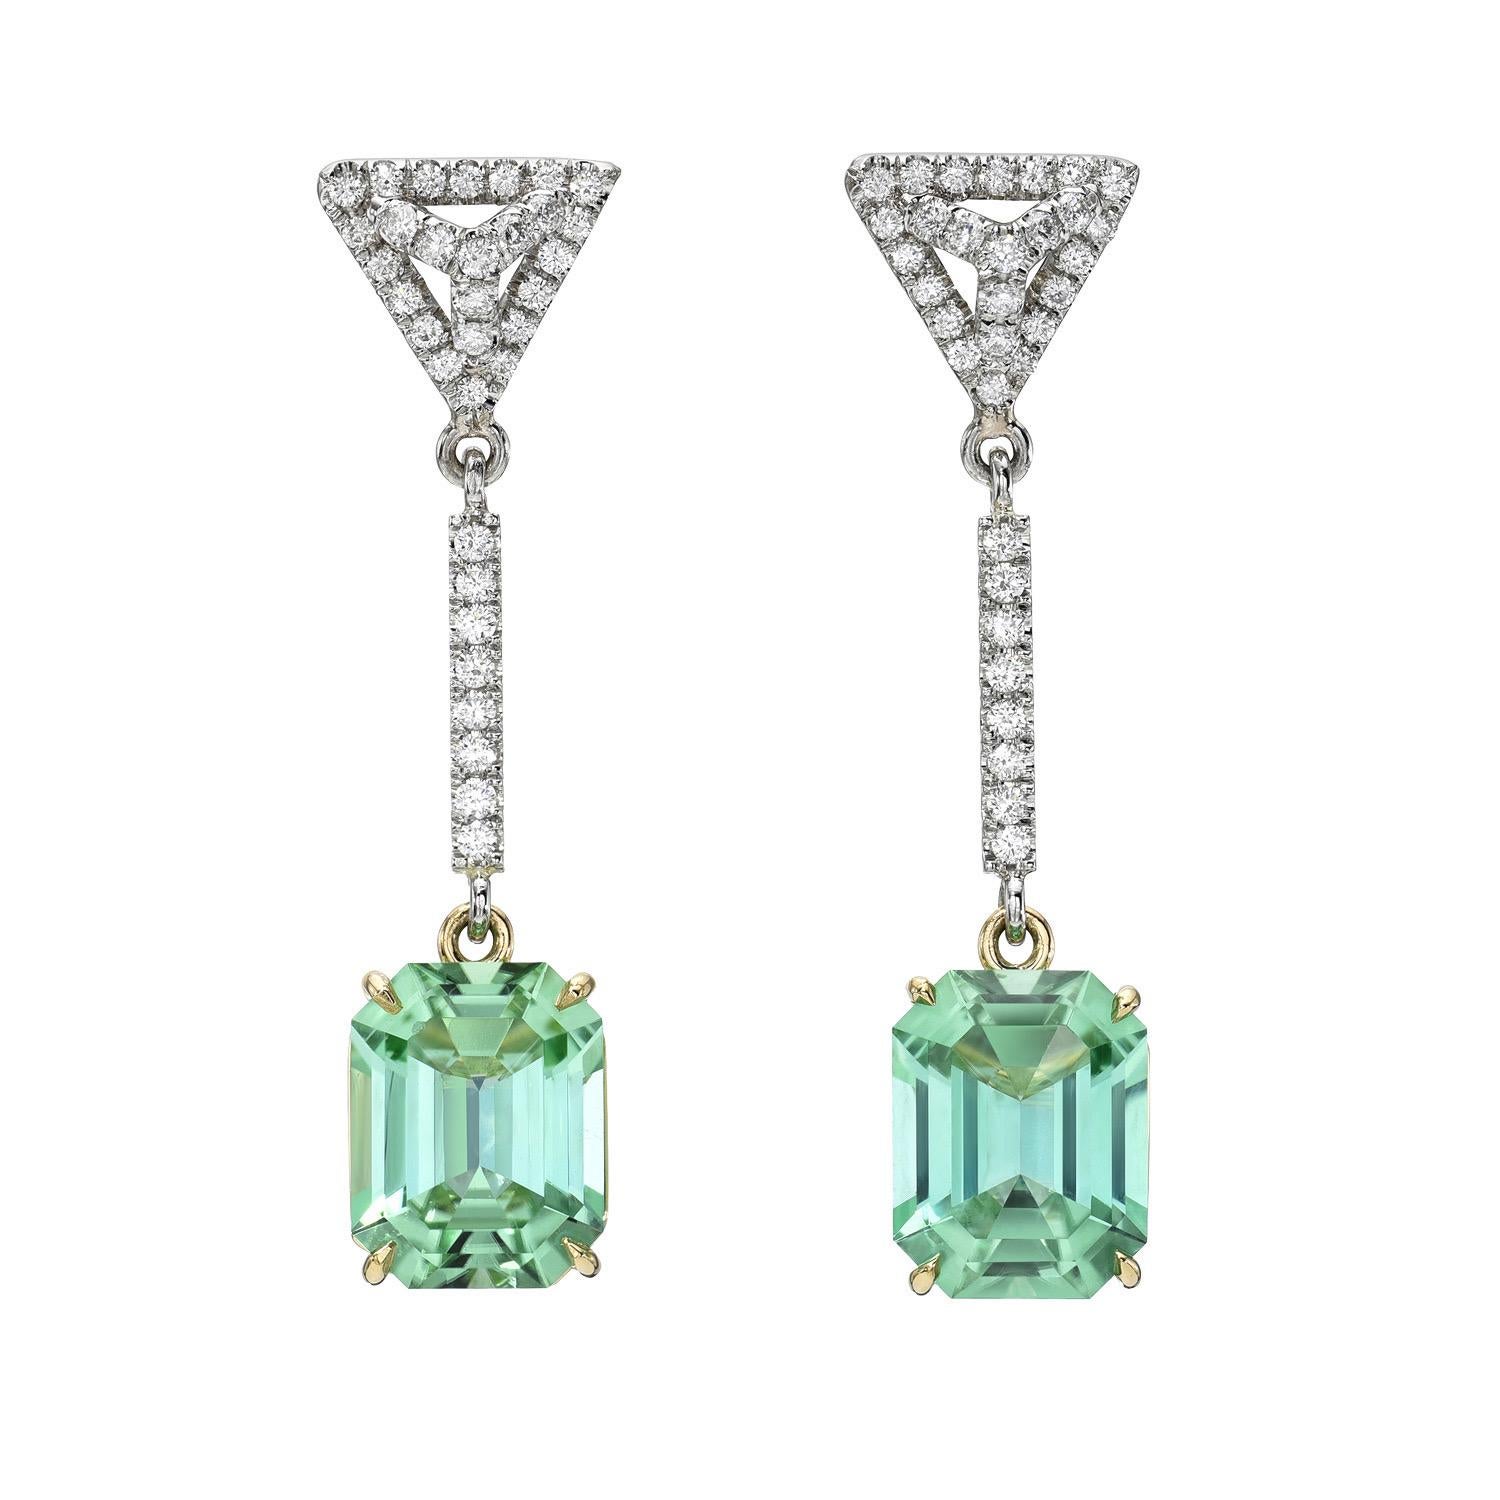 Contemporary Mint Green Tourmaline Earrings 4.55 Carat Emerald Cut